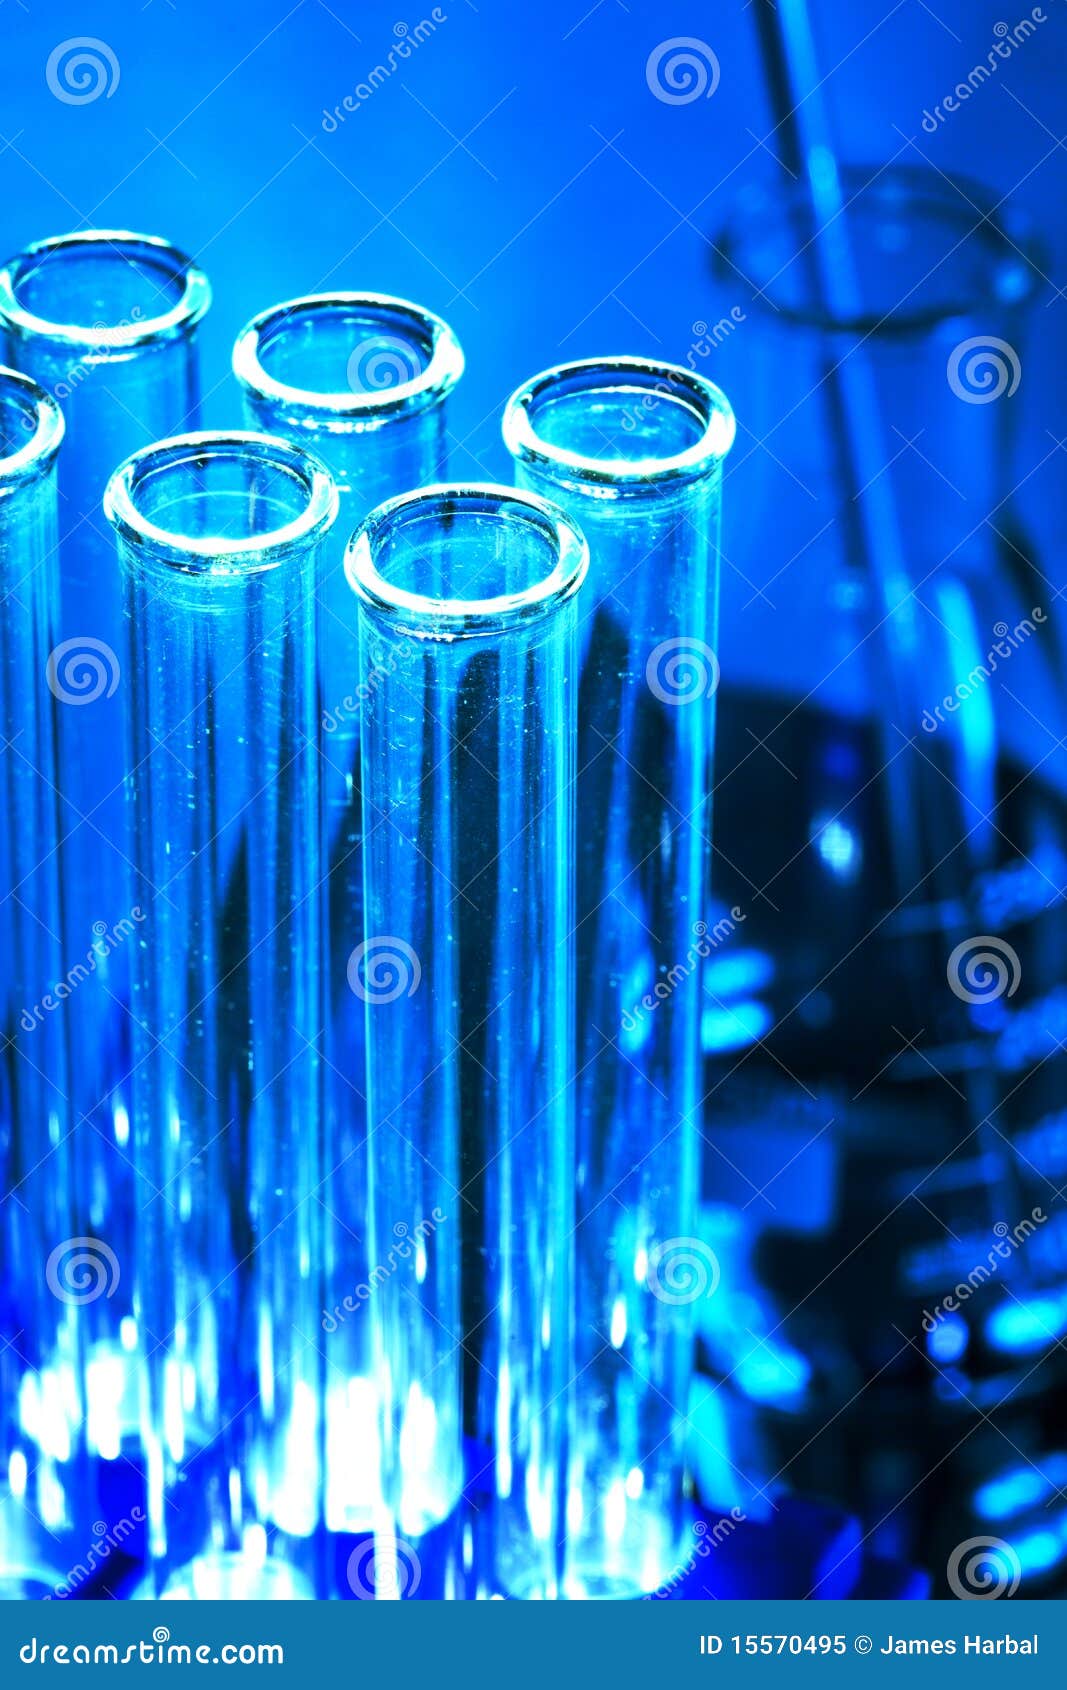 beakers and test tubes closeup